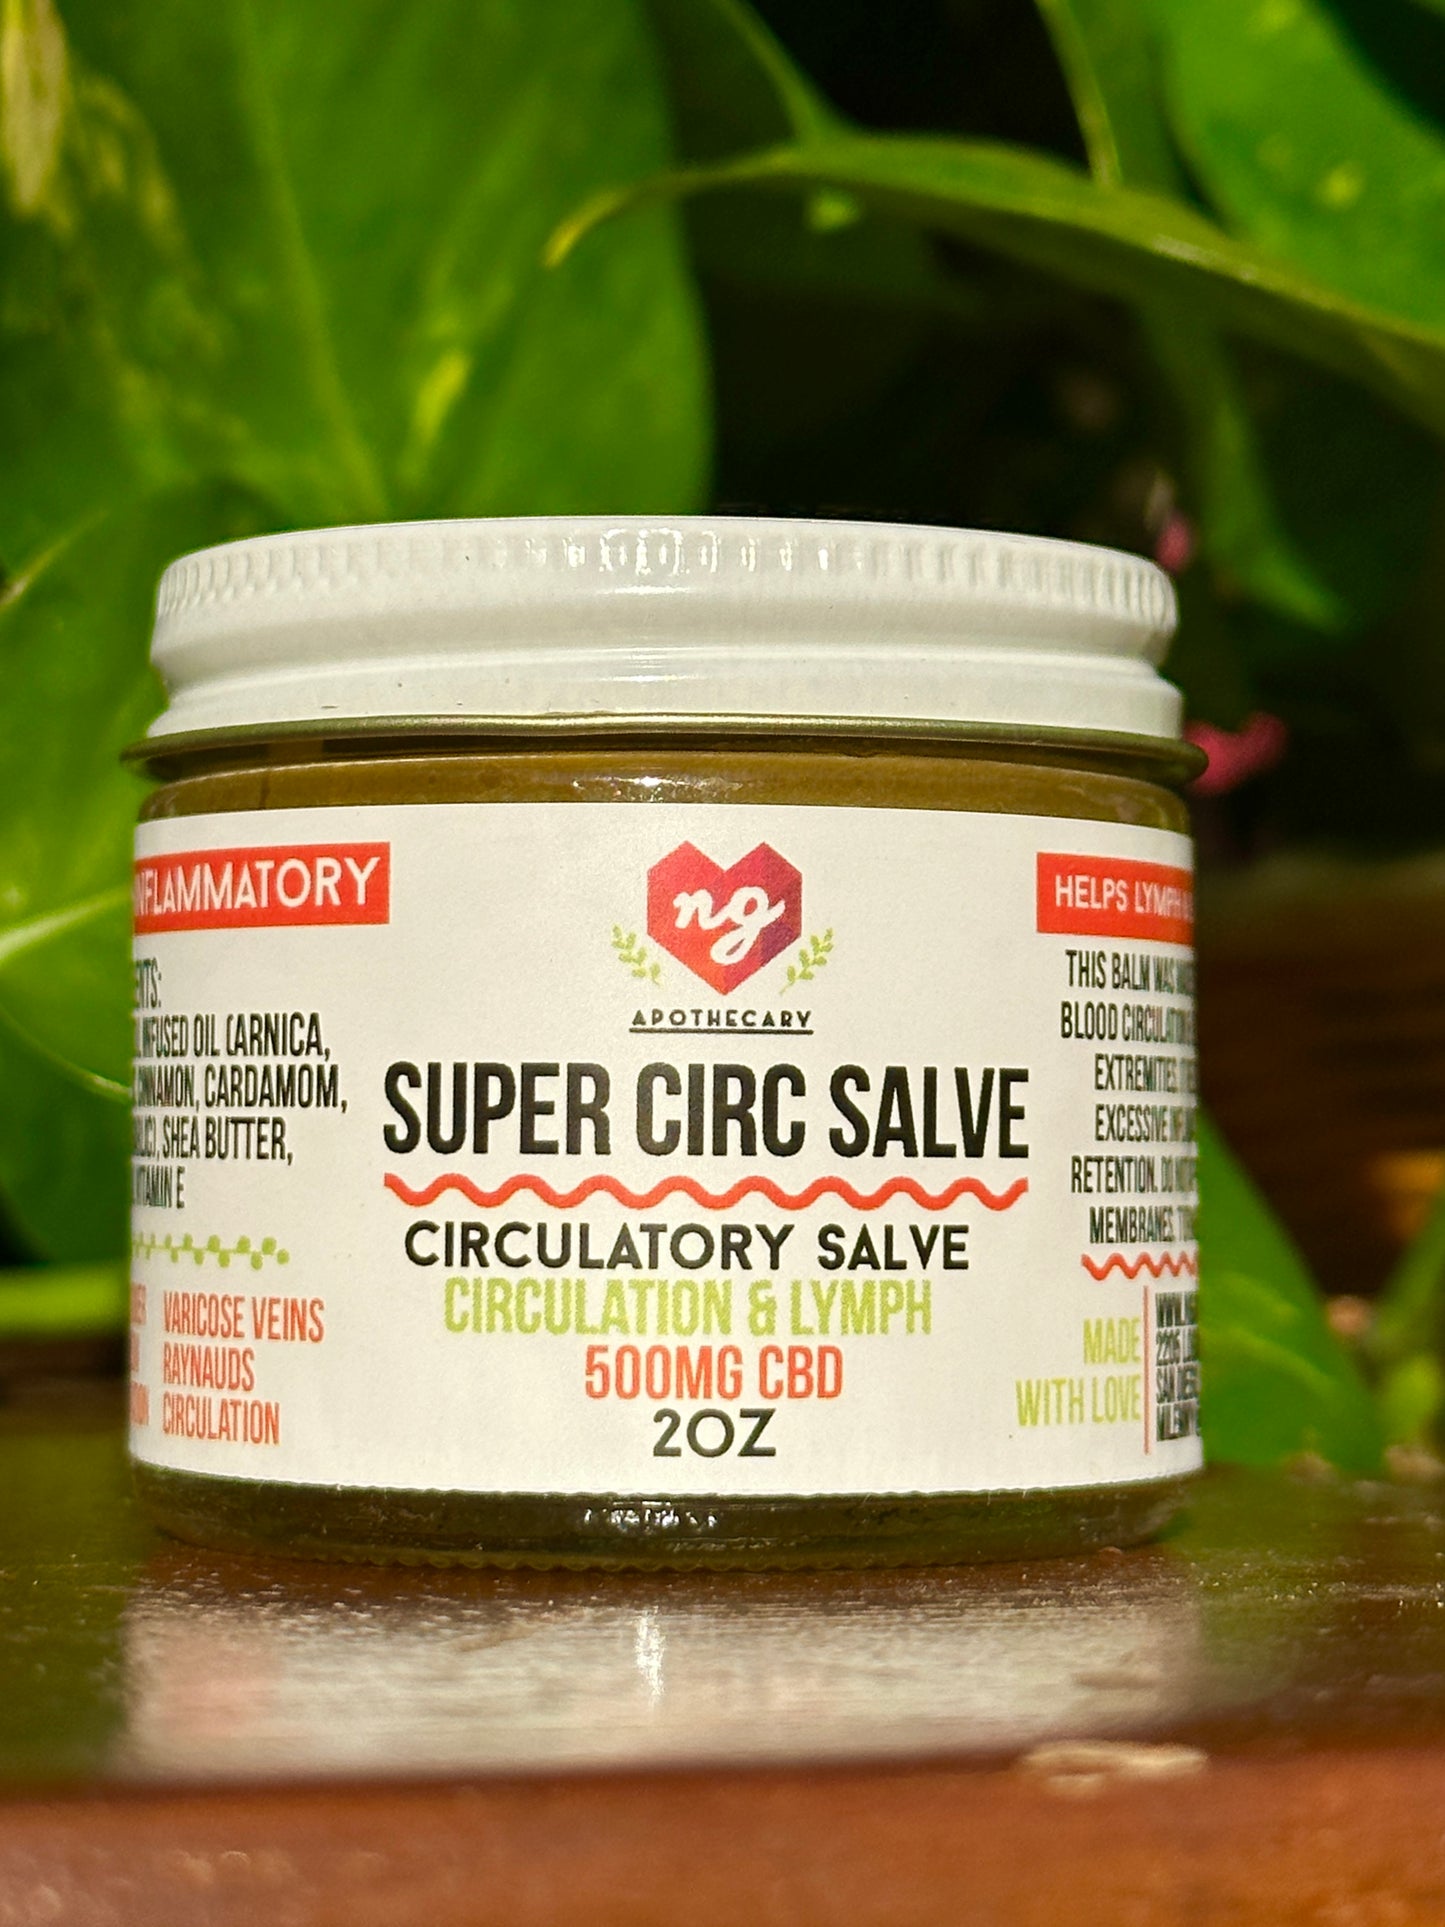 Super Circulatory Salve Anti-Inflammatory Balm